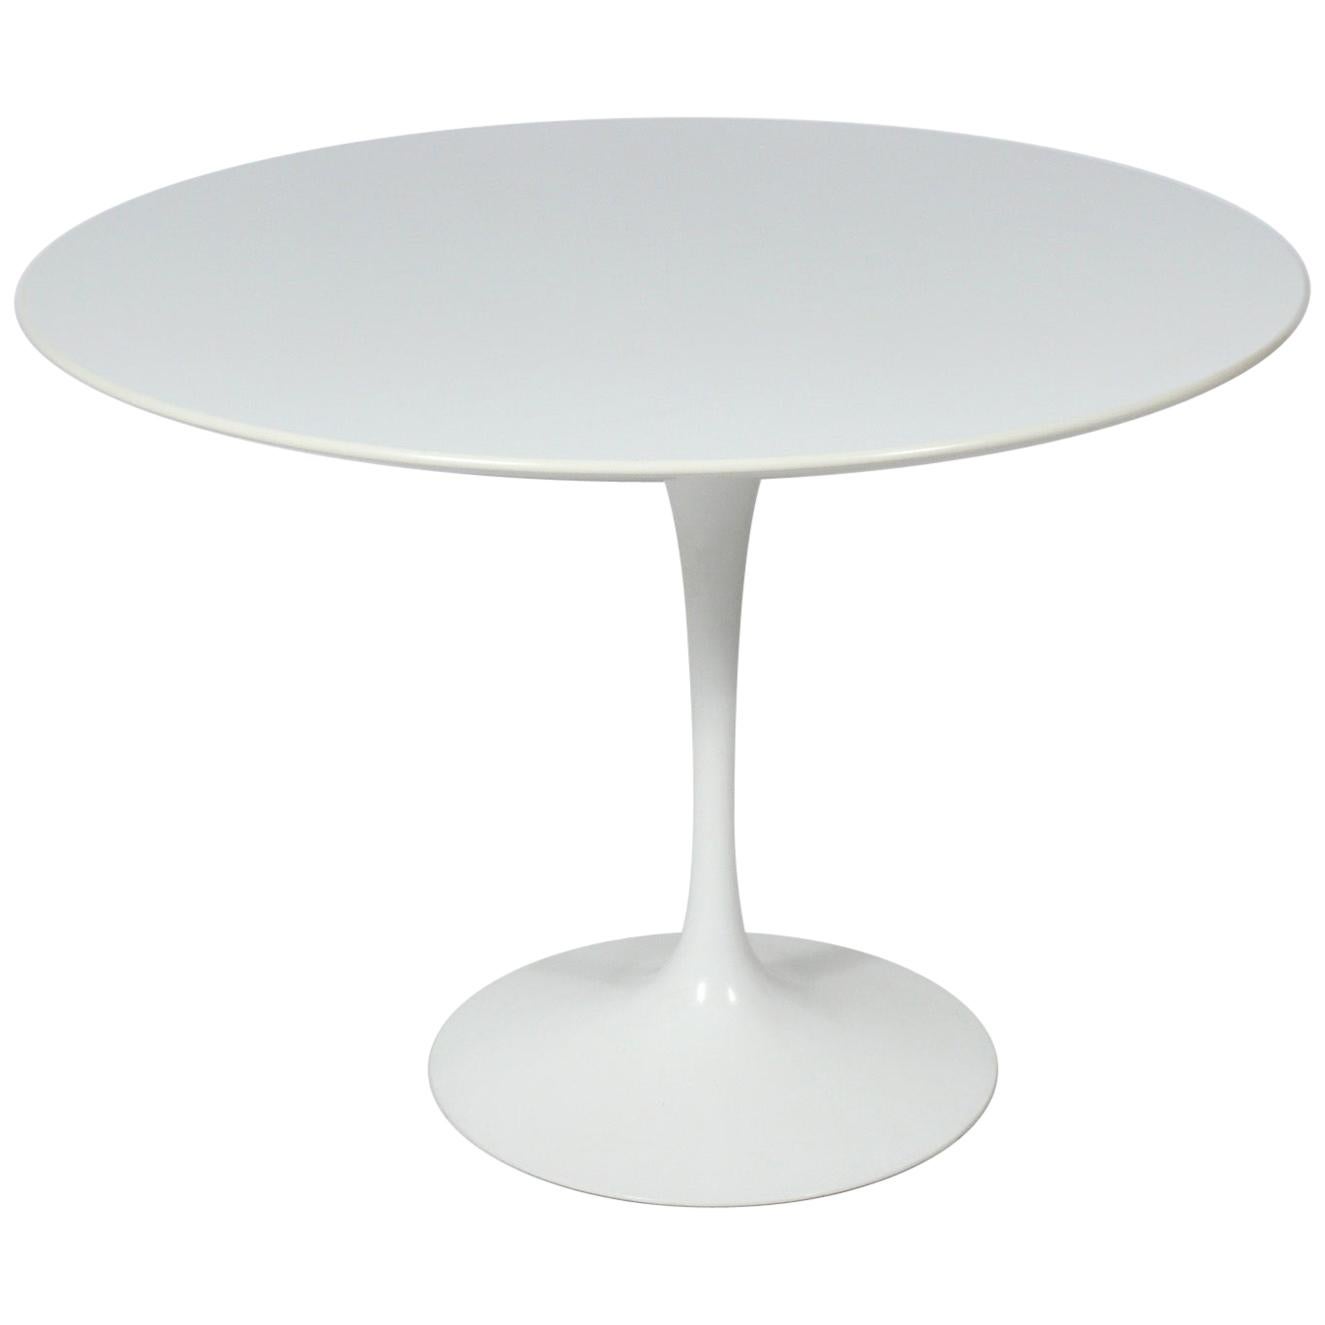 Sculptural Saarinen Dining Table by Knoll